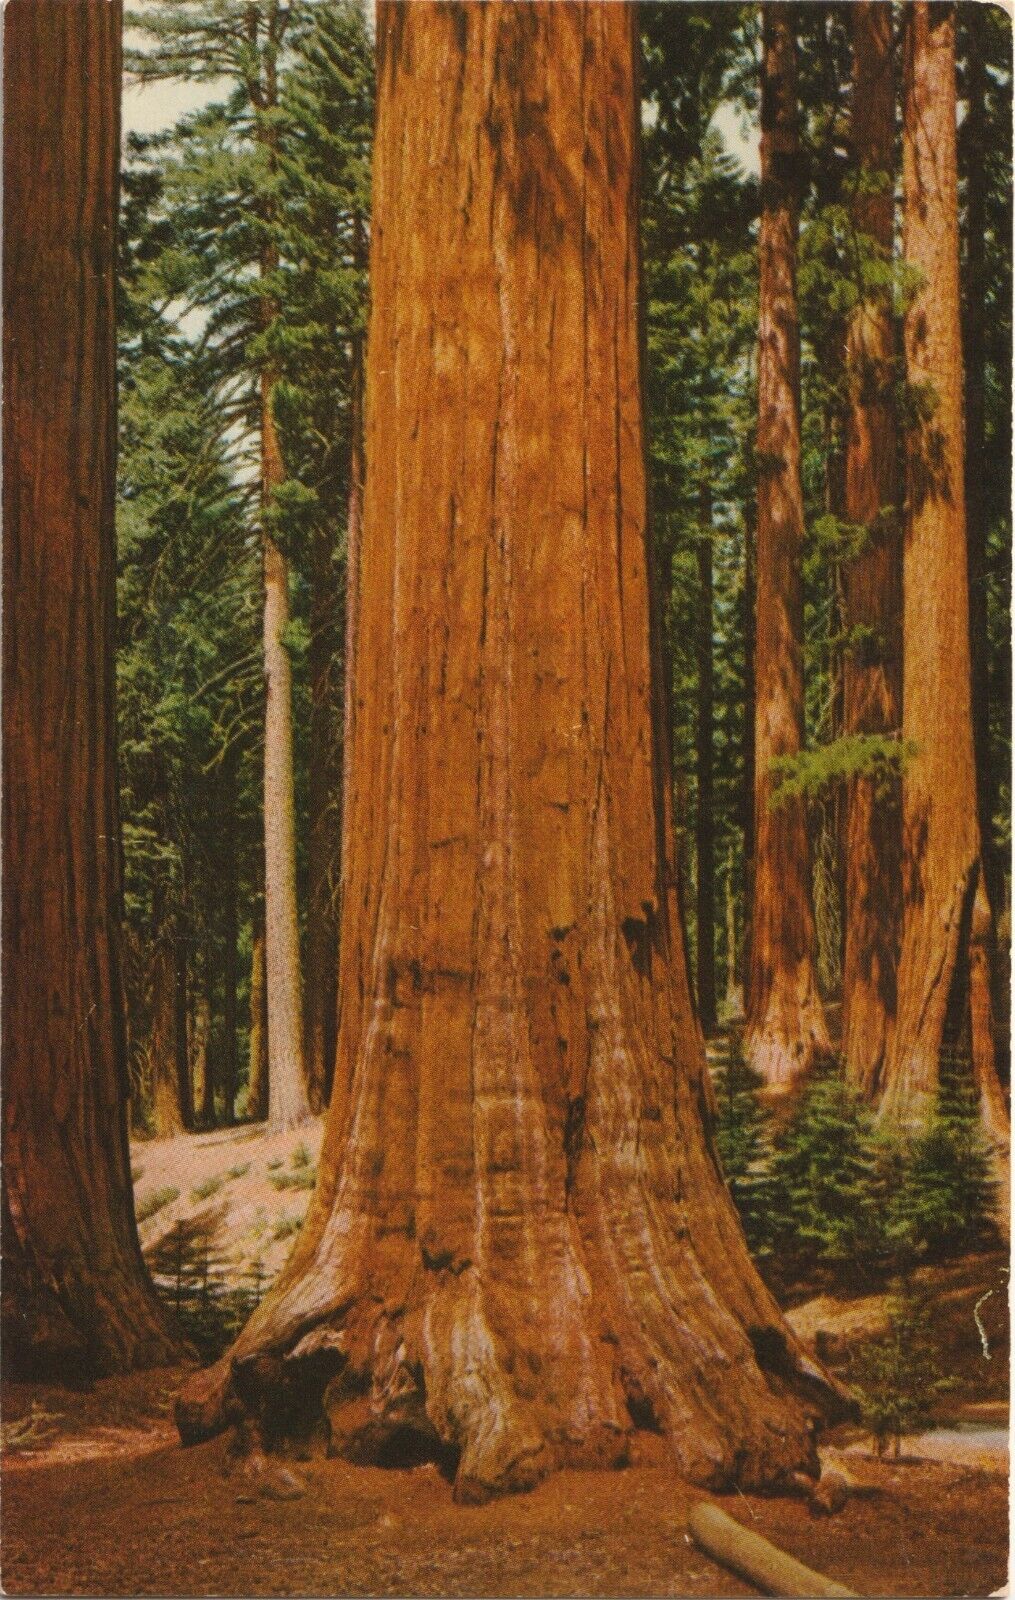 Yosemite Nat Park Big Trees-Mariposa Grove of Big Trees, CA-vintage unposted